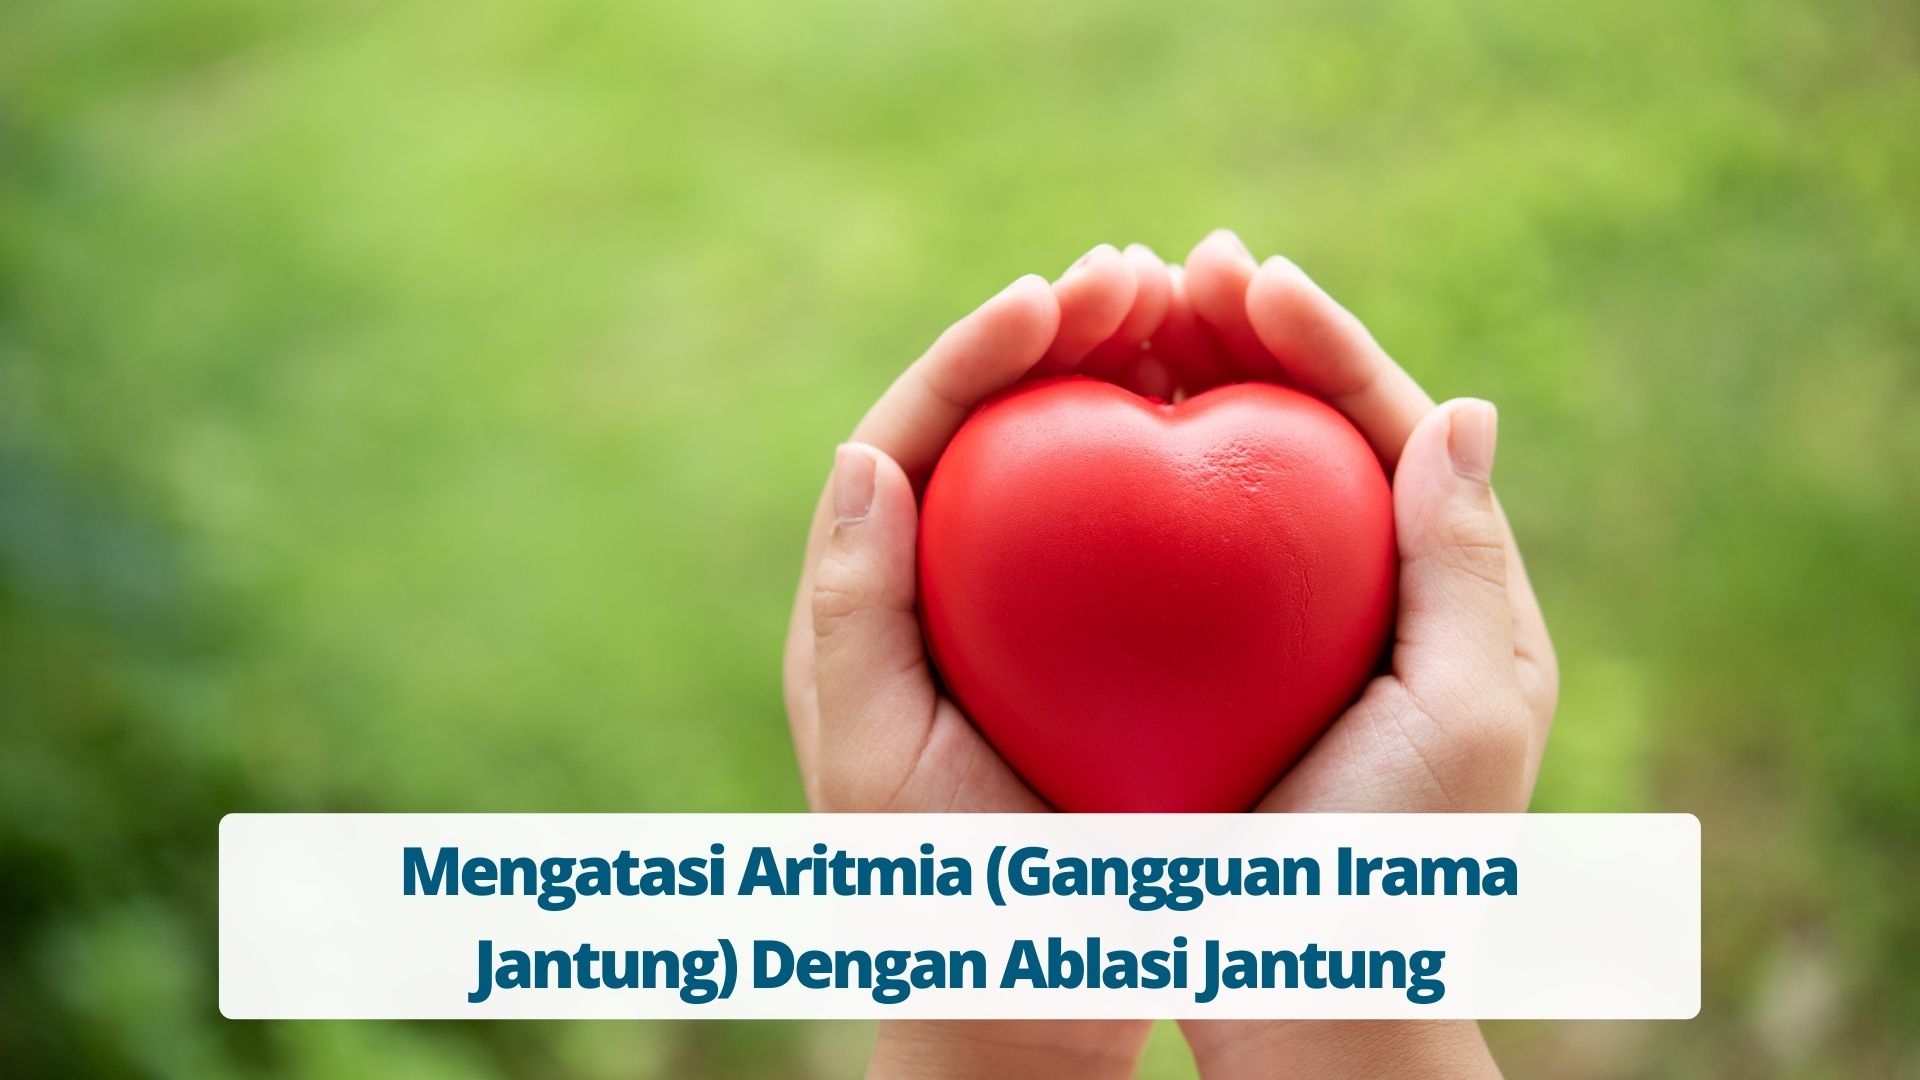 Mengatasi Aritmia (Gangguan Irama Jantung) Dengan Ablasi Jantung